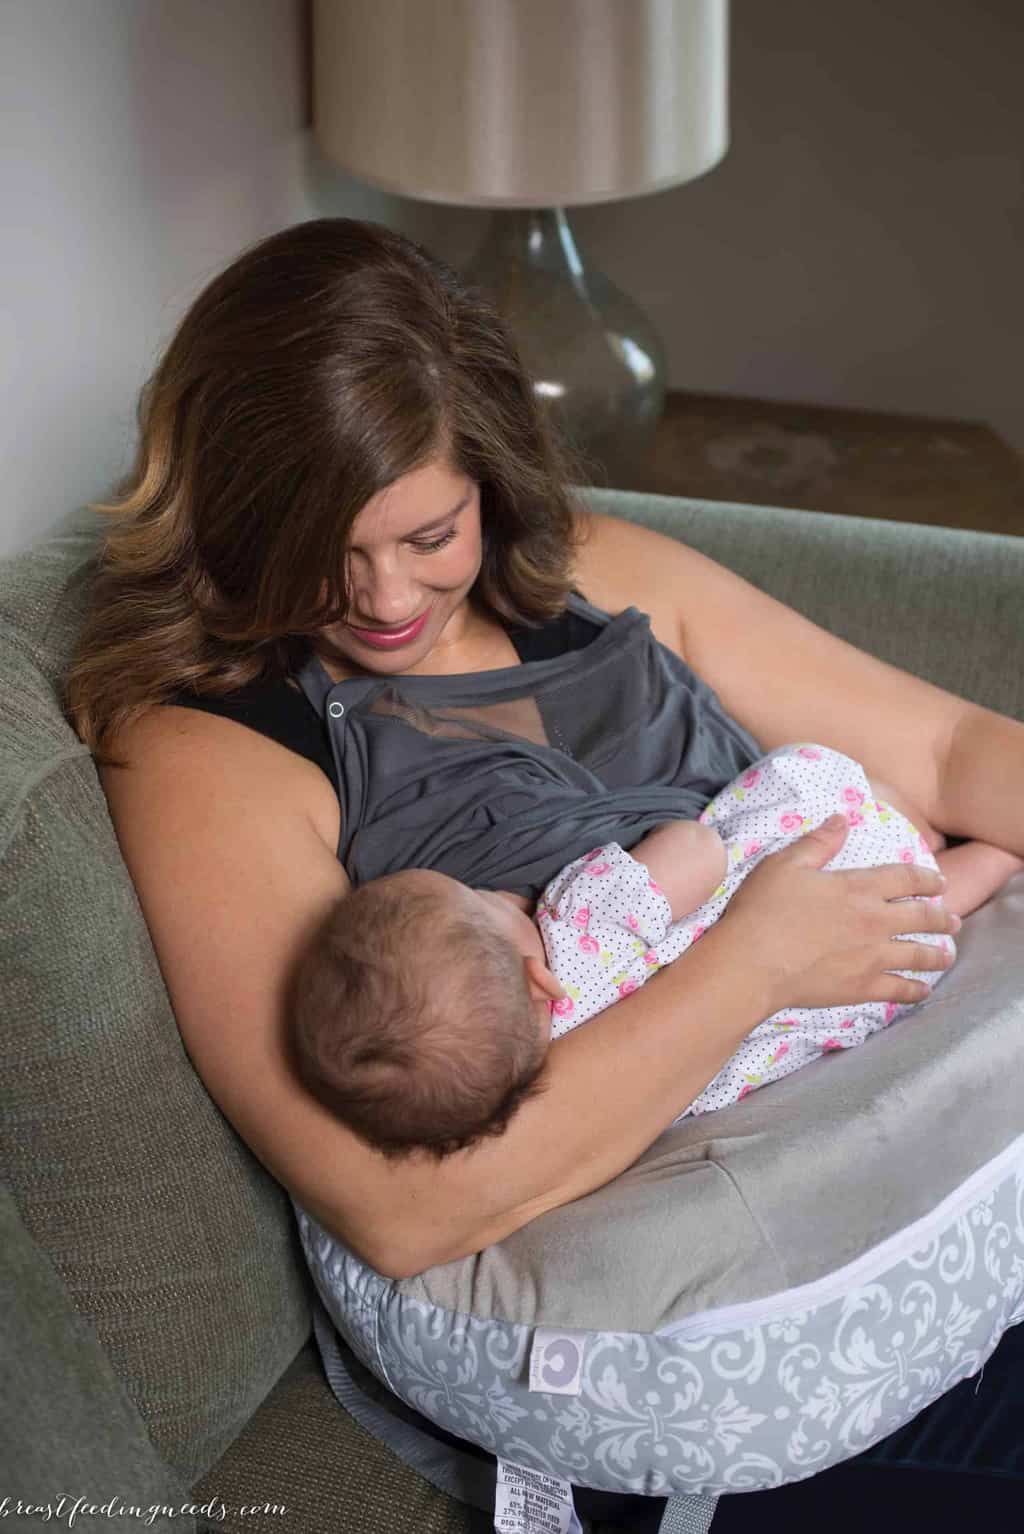 When will breastfeeding get easier